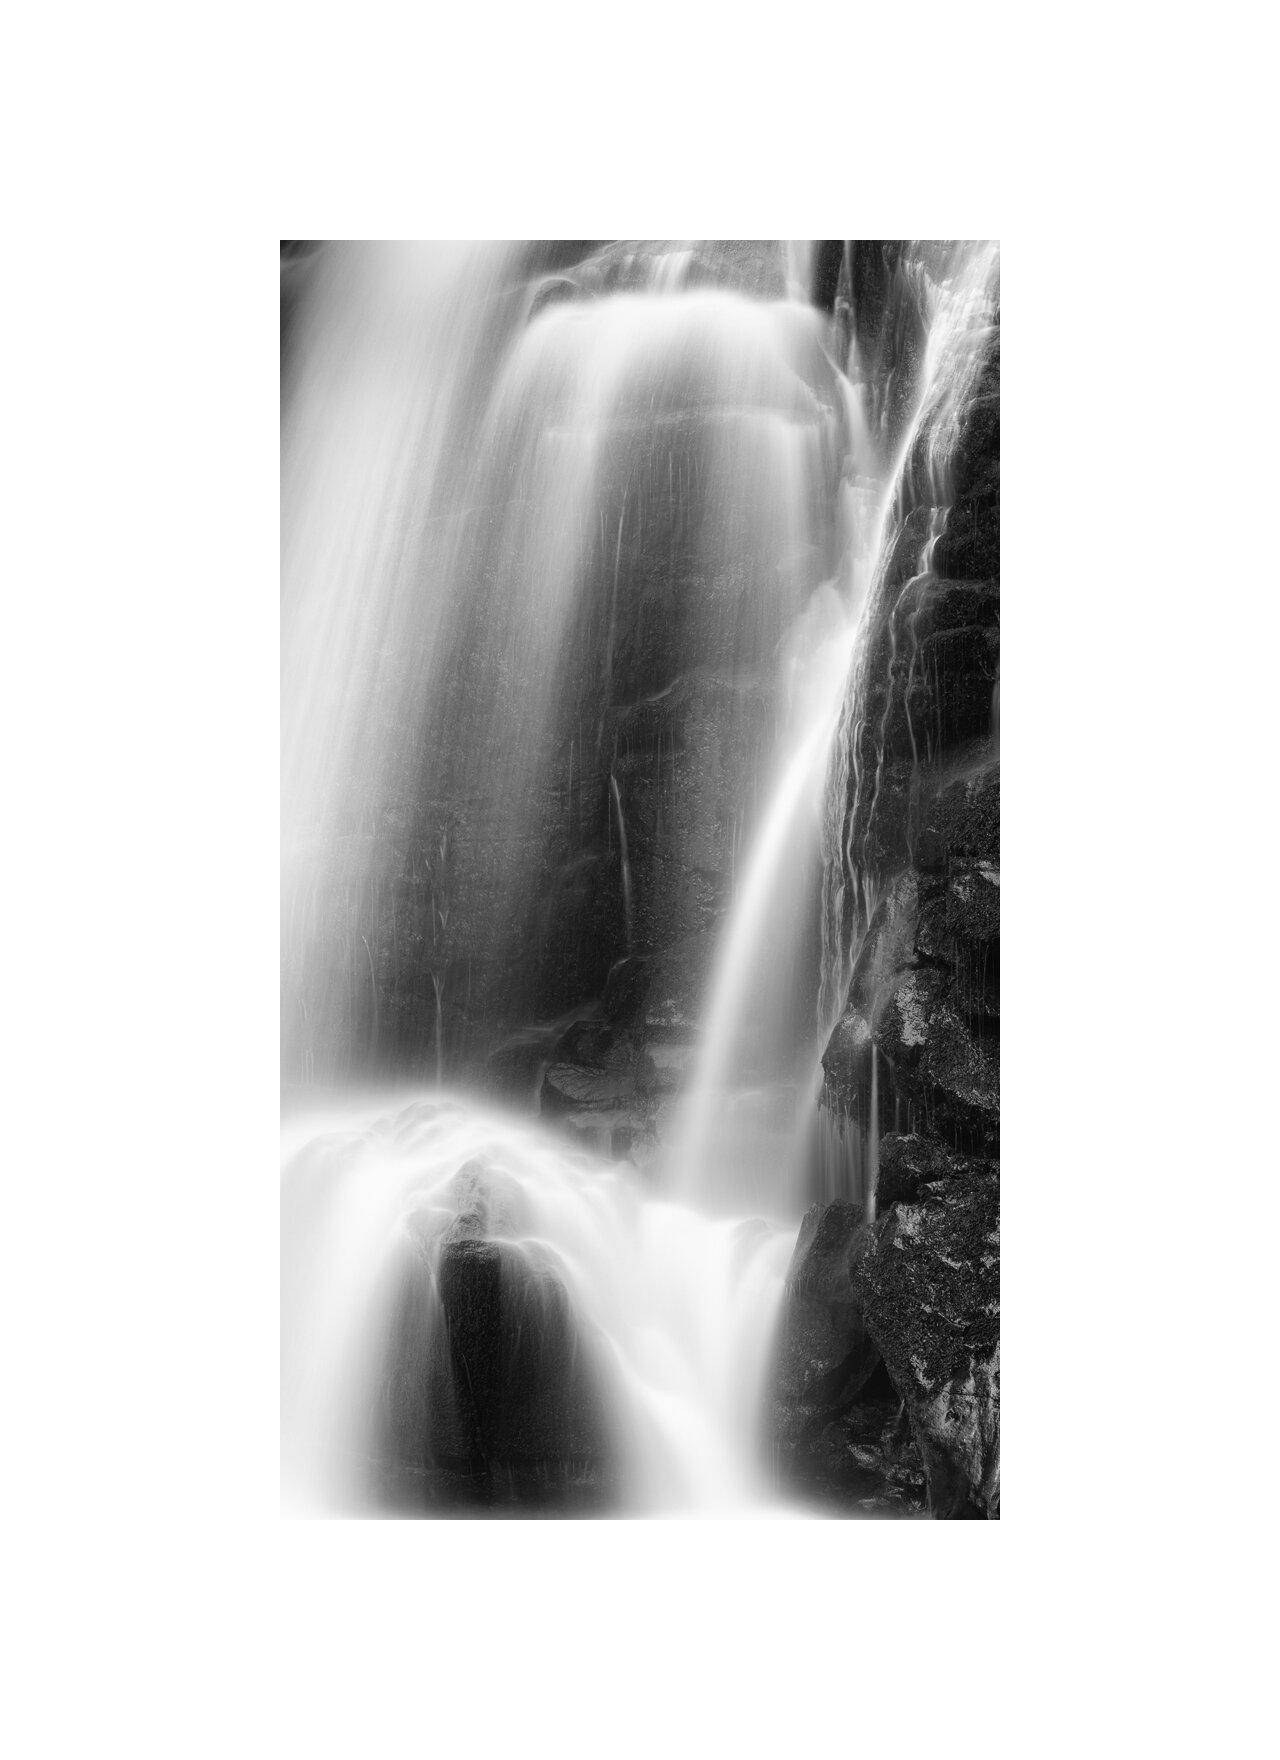 Cataracts, Asama Great Falls